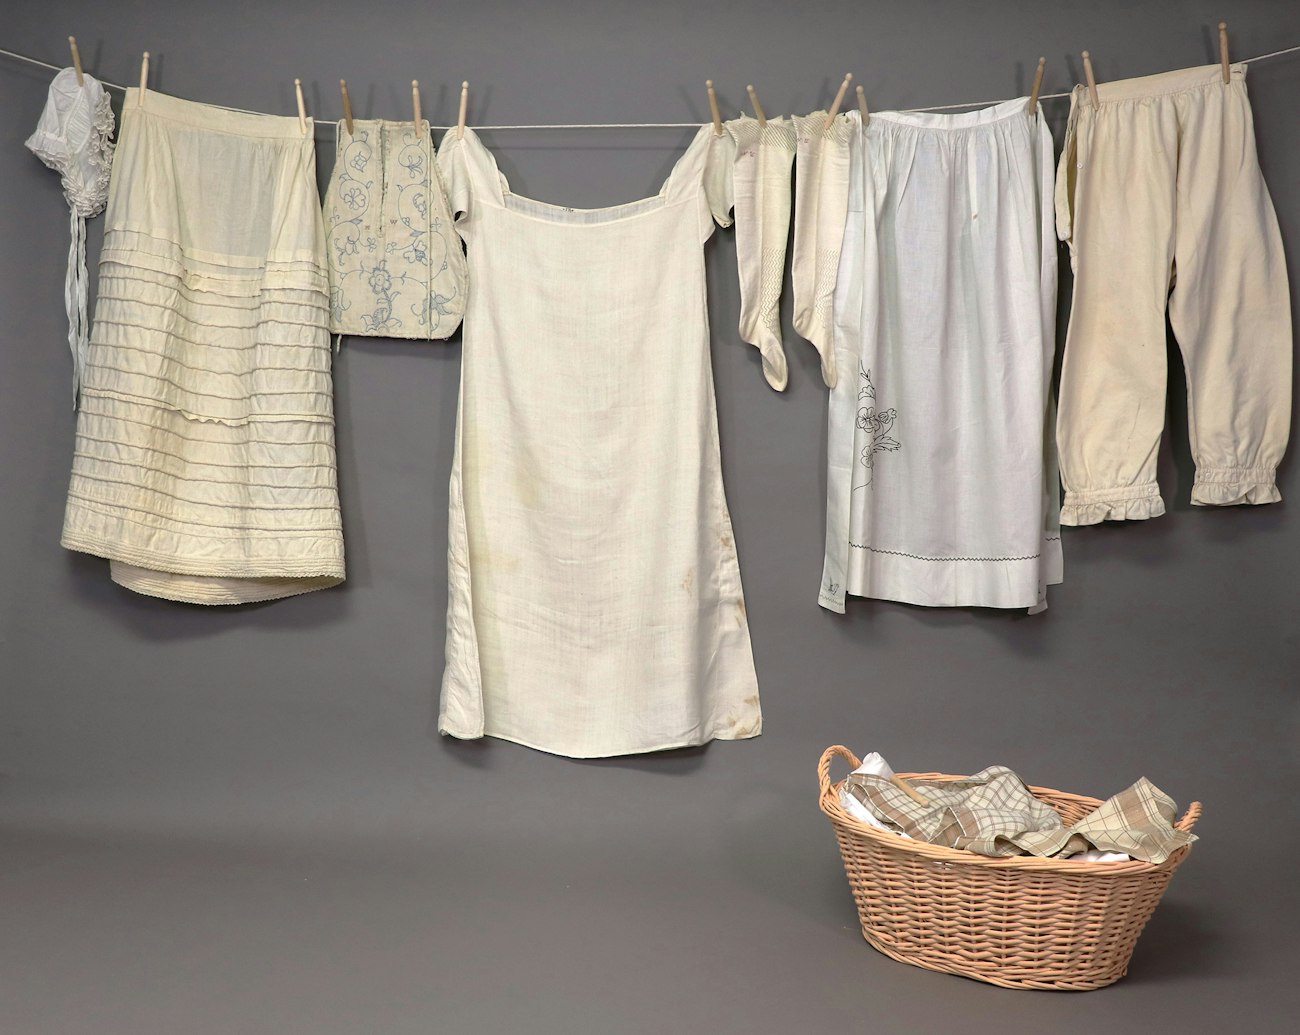 62 1830s - 1840s Womens Undergarments, Stockings ideas